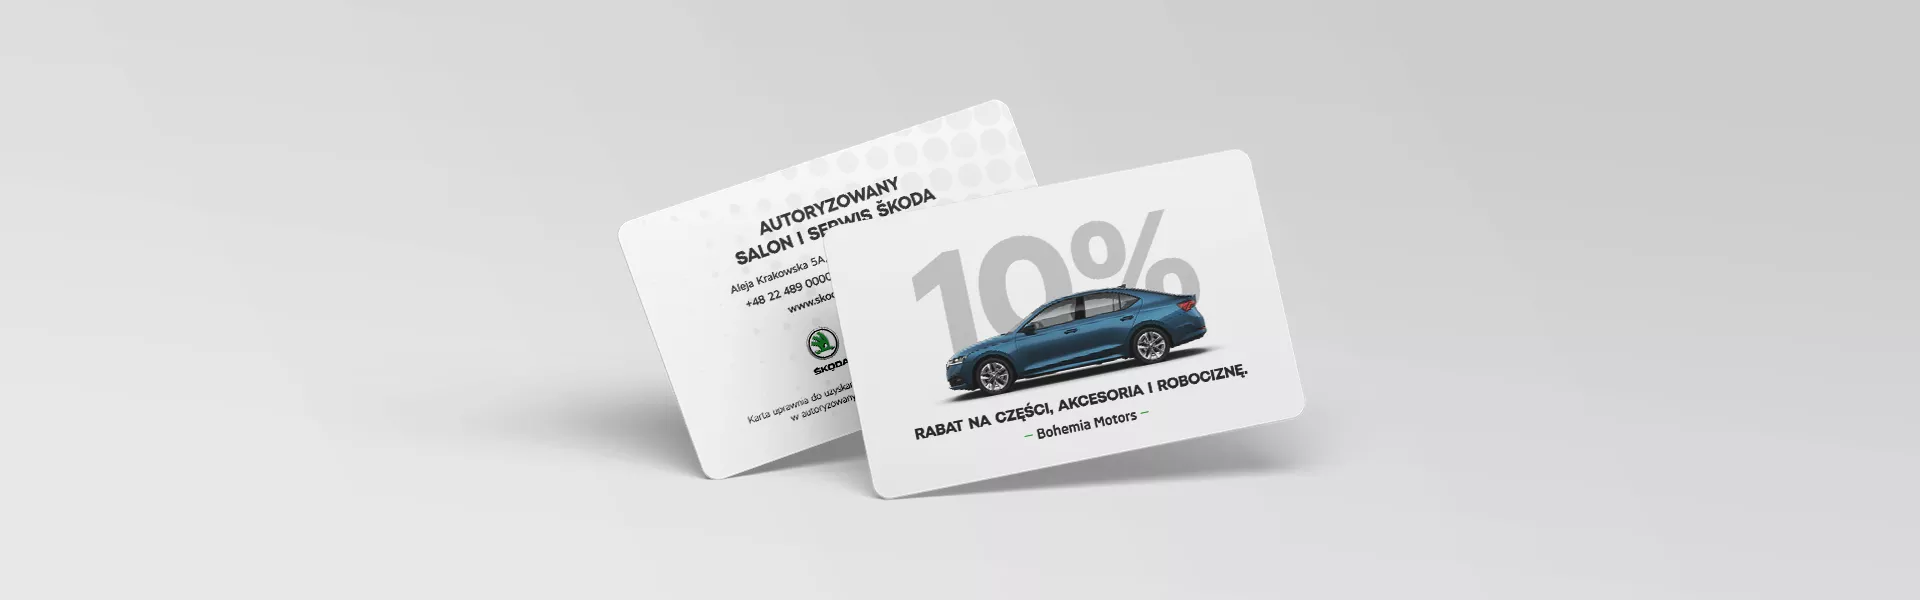 karty rabatowe w ASO Škoda Bohemia Motors